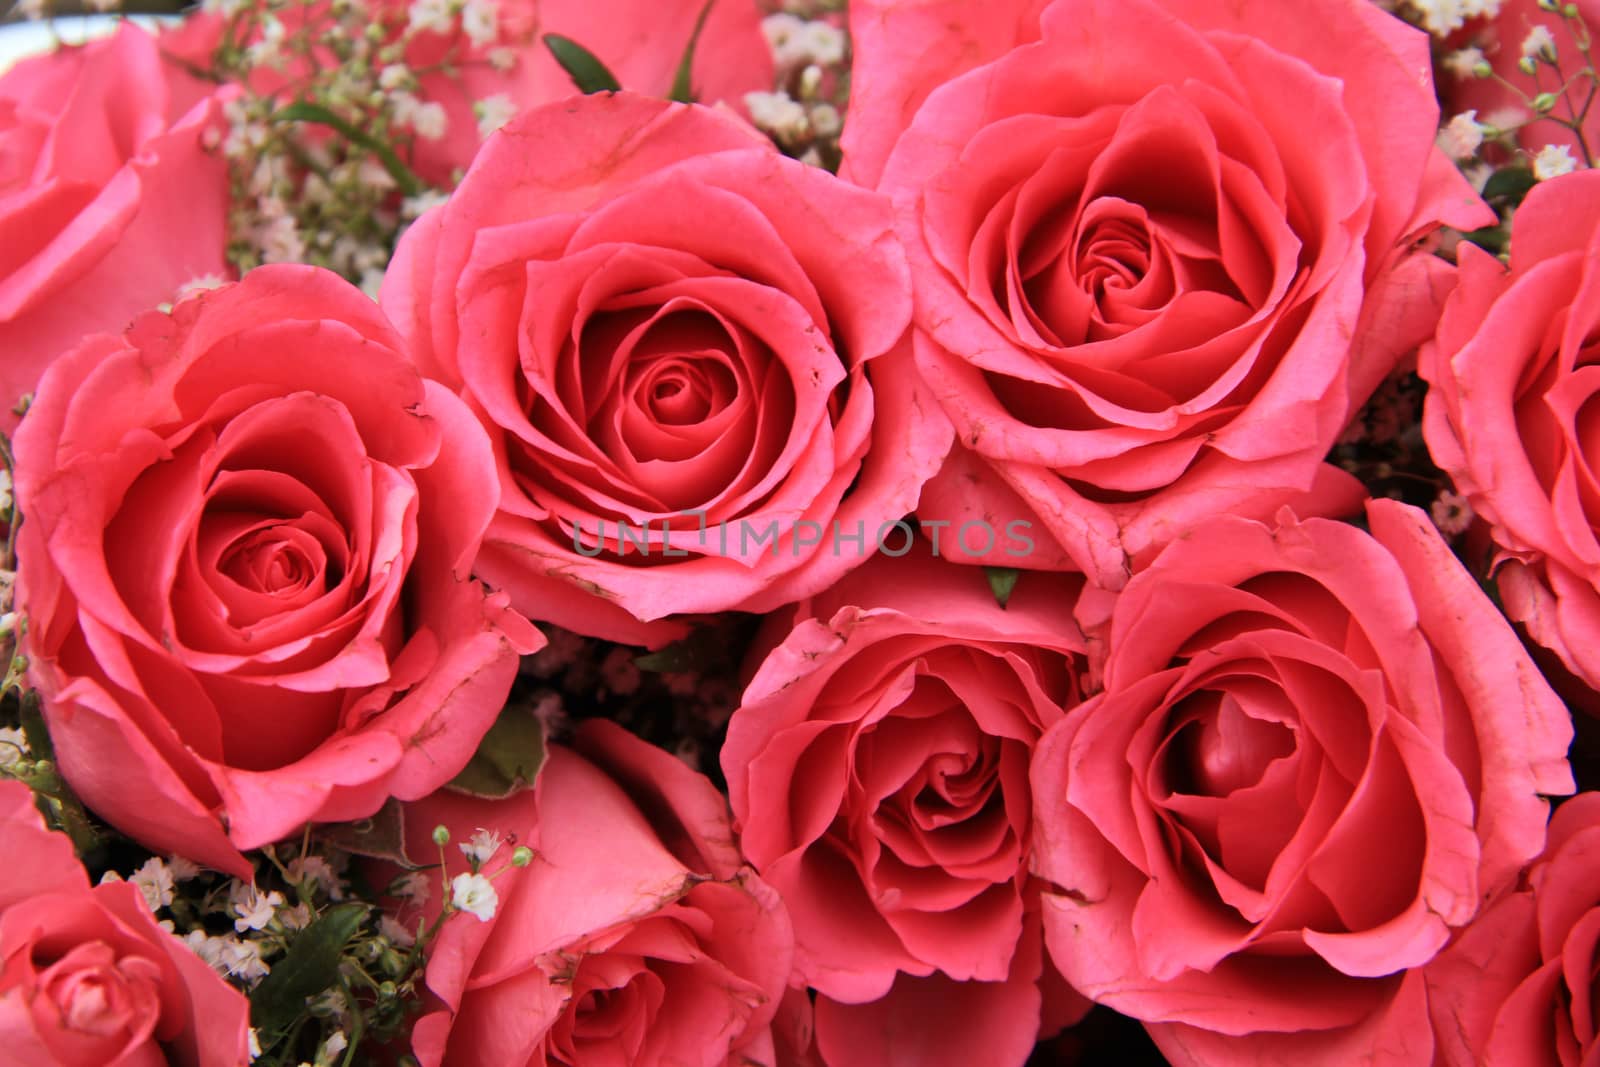 Pink roses in a bridal arrangement by studioportosabbia